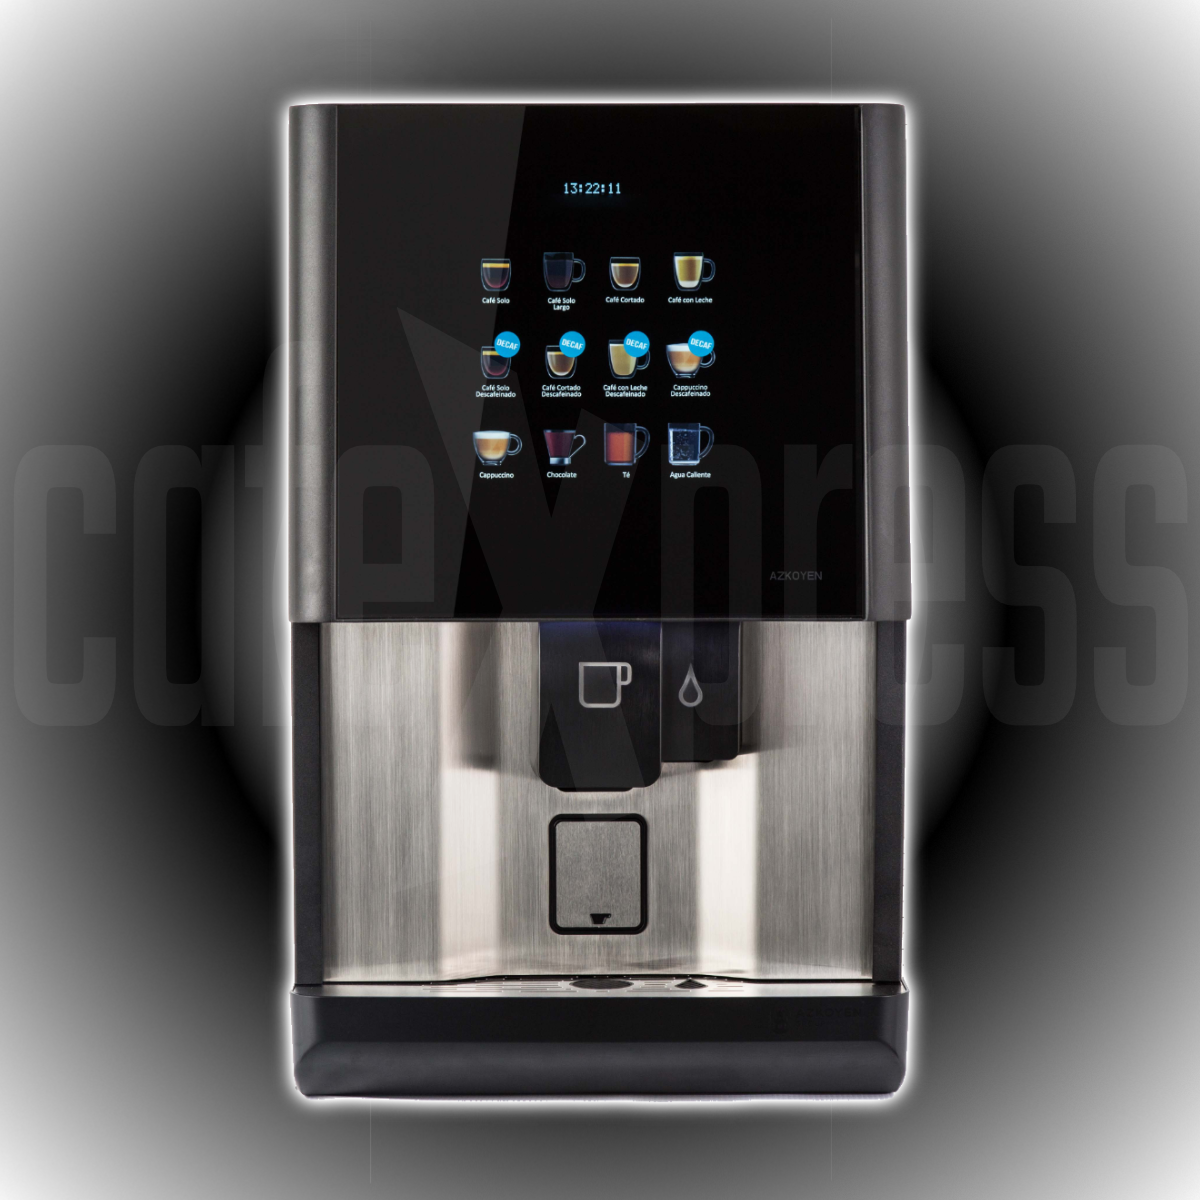 Coffetek VITRO S5 ESPRESSO Coffee Machine